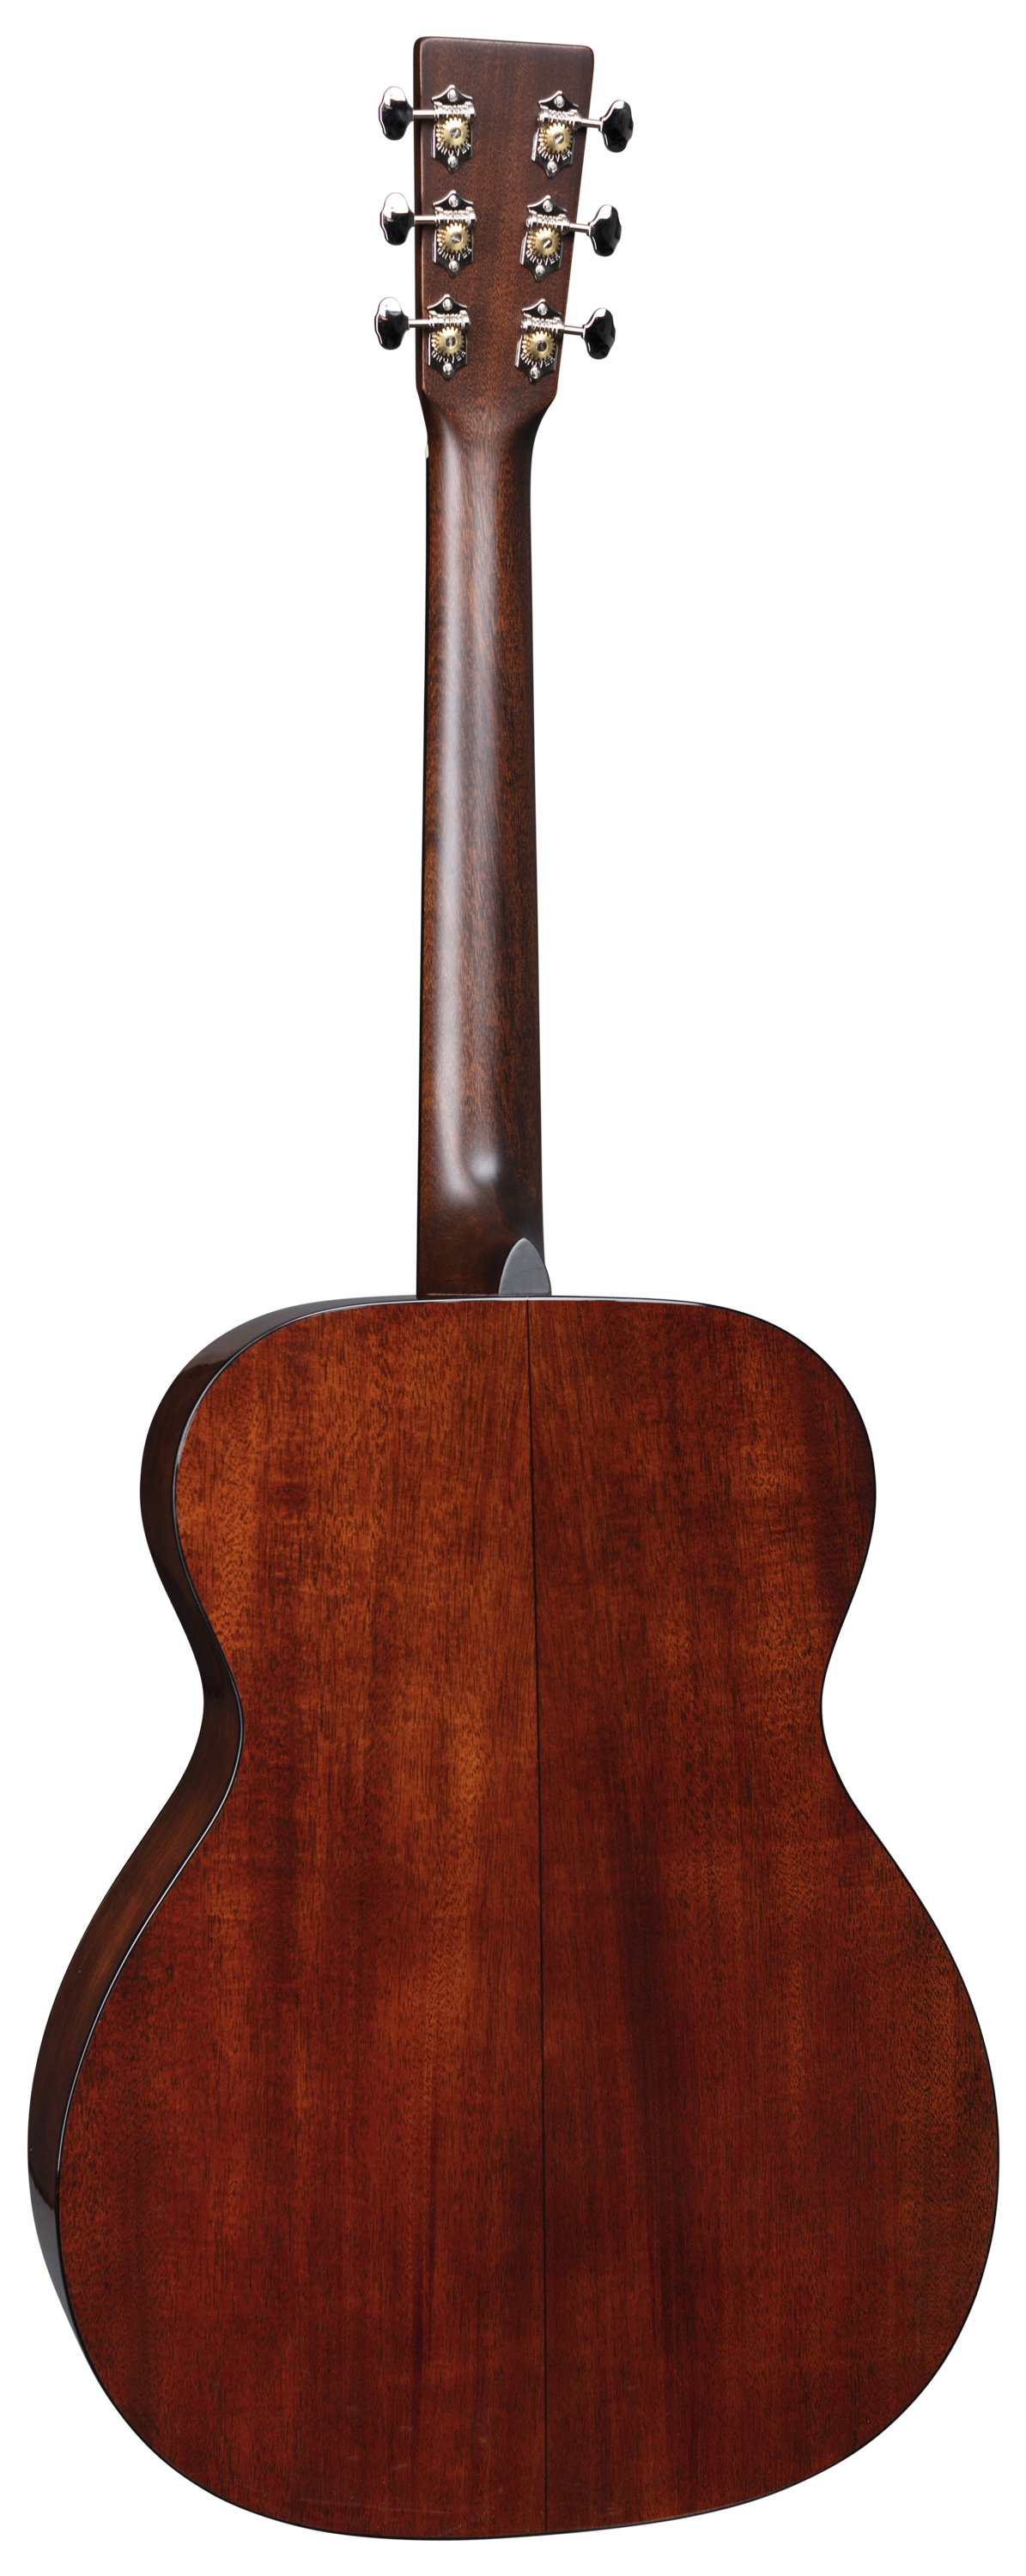 Martin 000-18 Acoustic Guitar | Martin Guitar